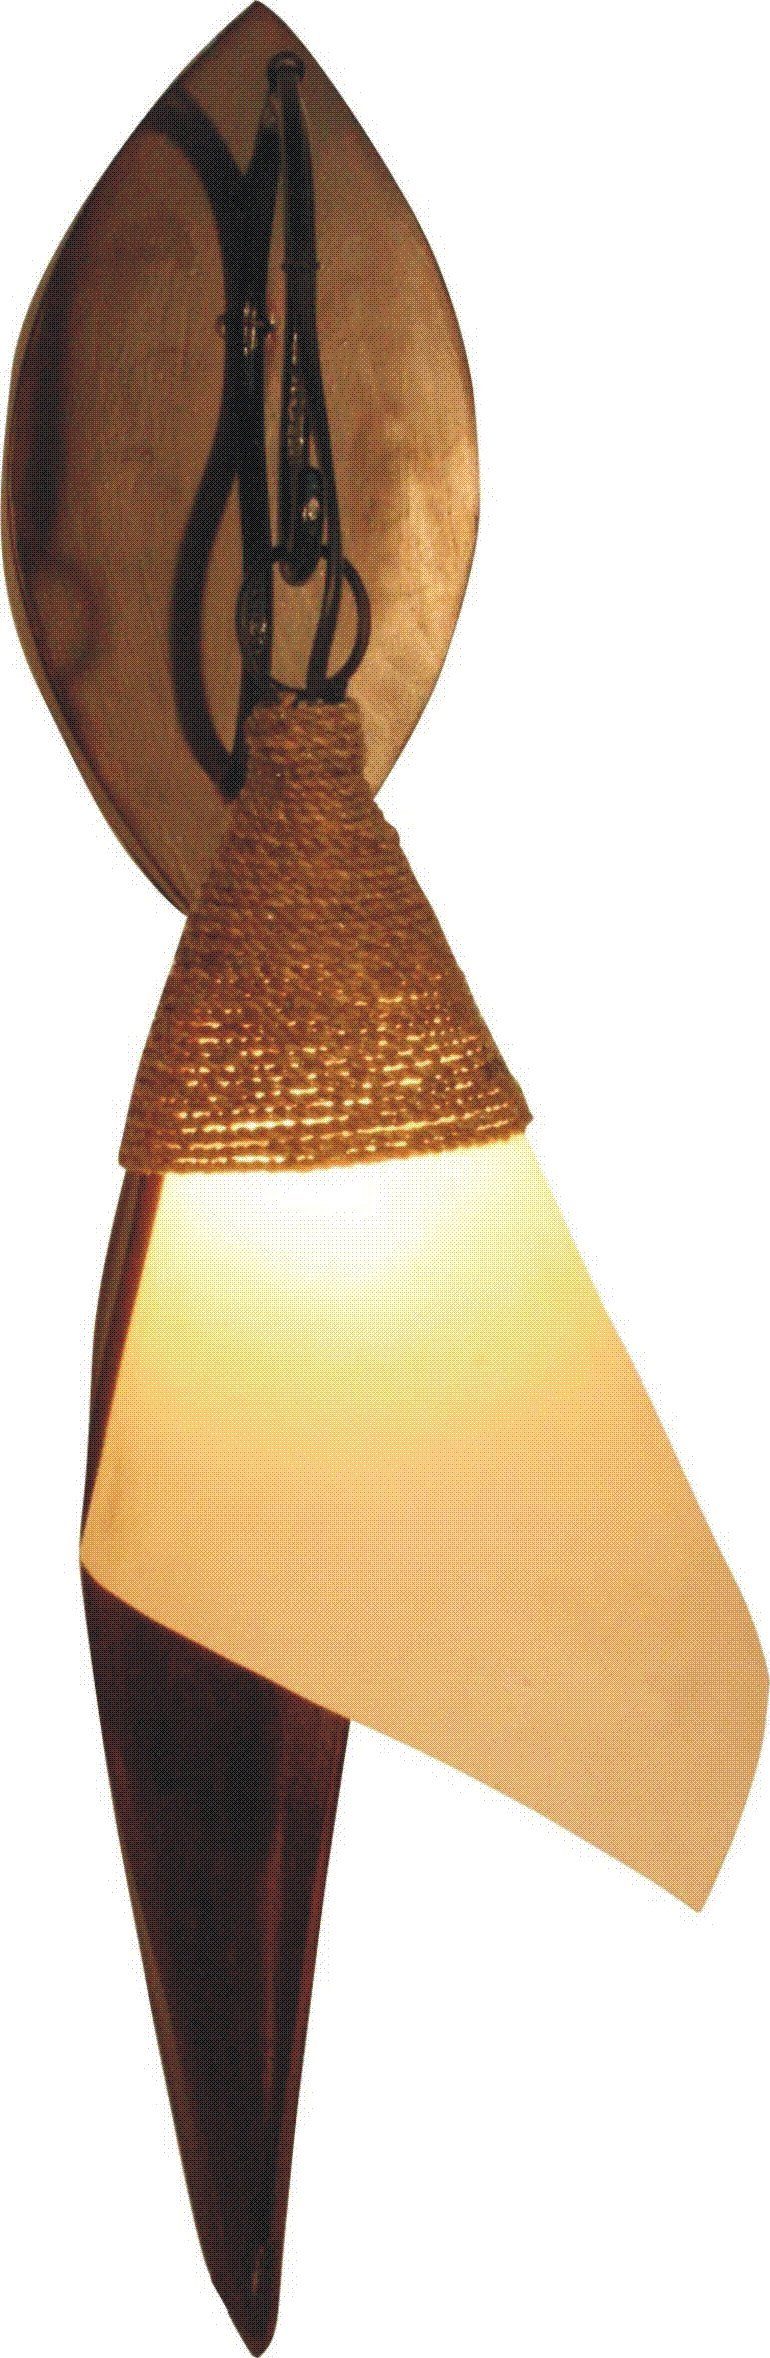 Guru-Shop Wandleuchte Palmenblatt Wandlampe, in Bali handgefertigt.., Leuchtmittel nicht inklusive Modell Bandurina